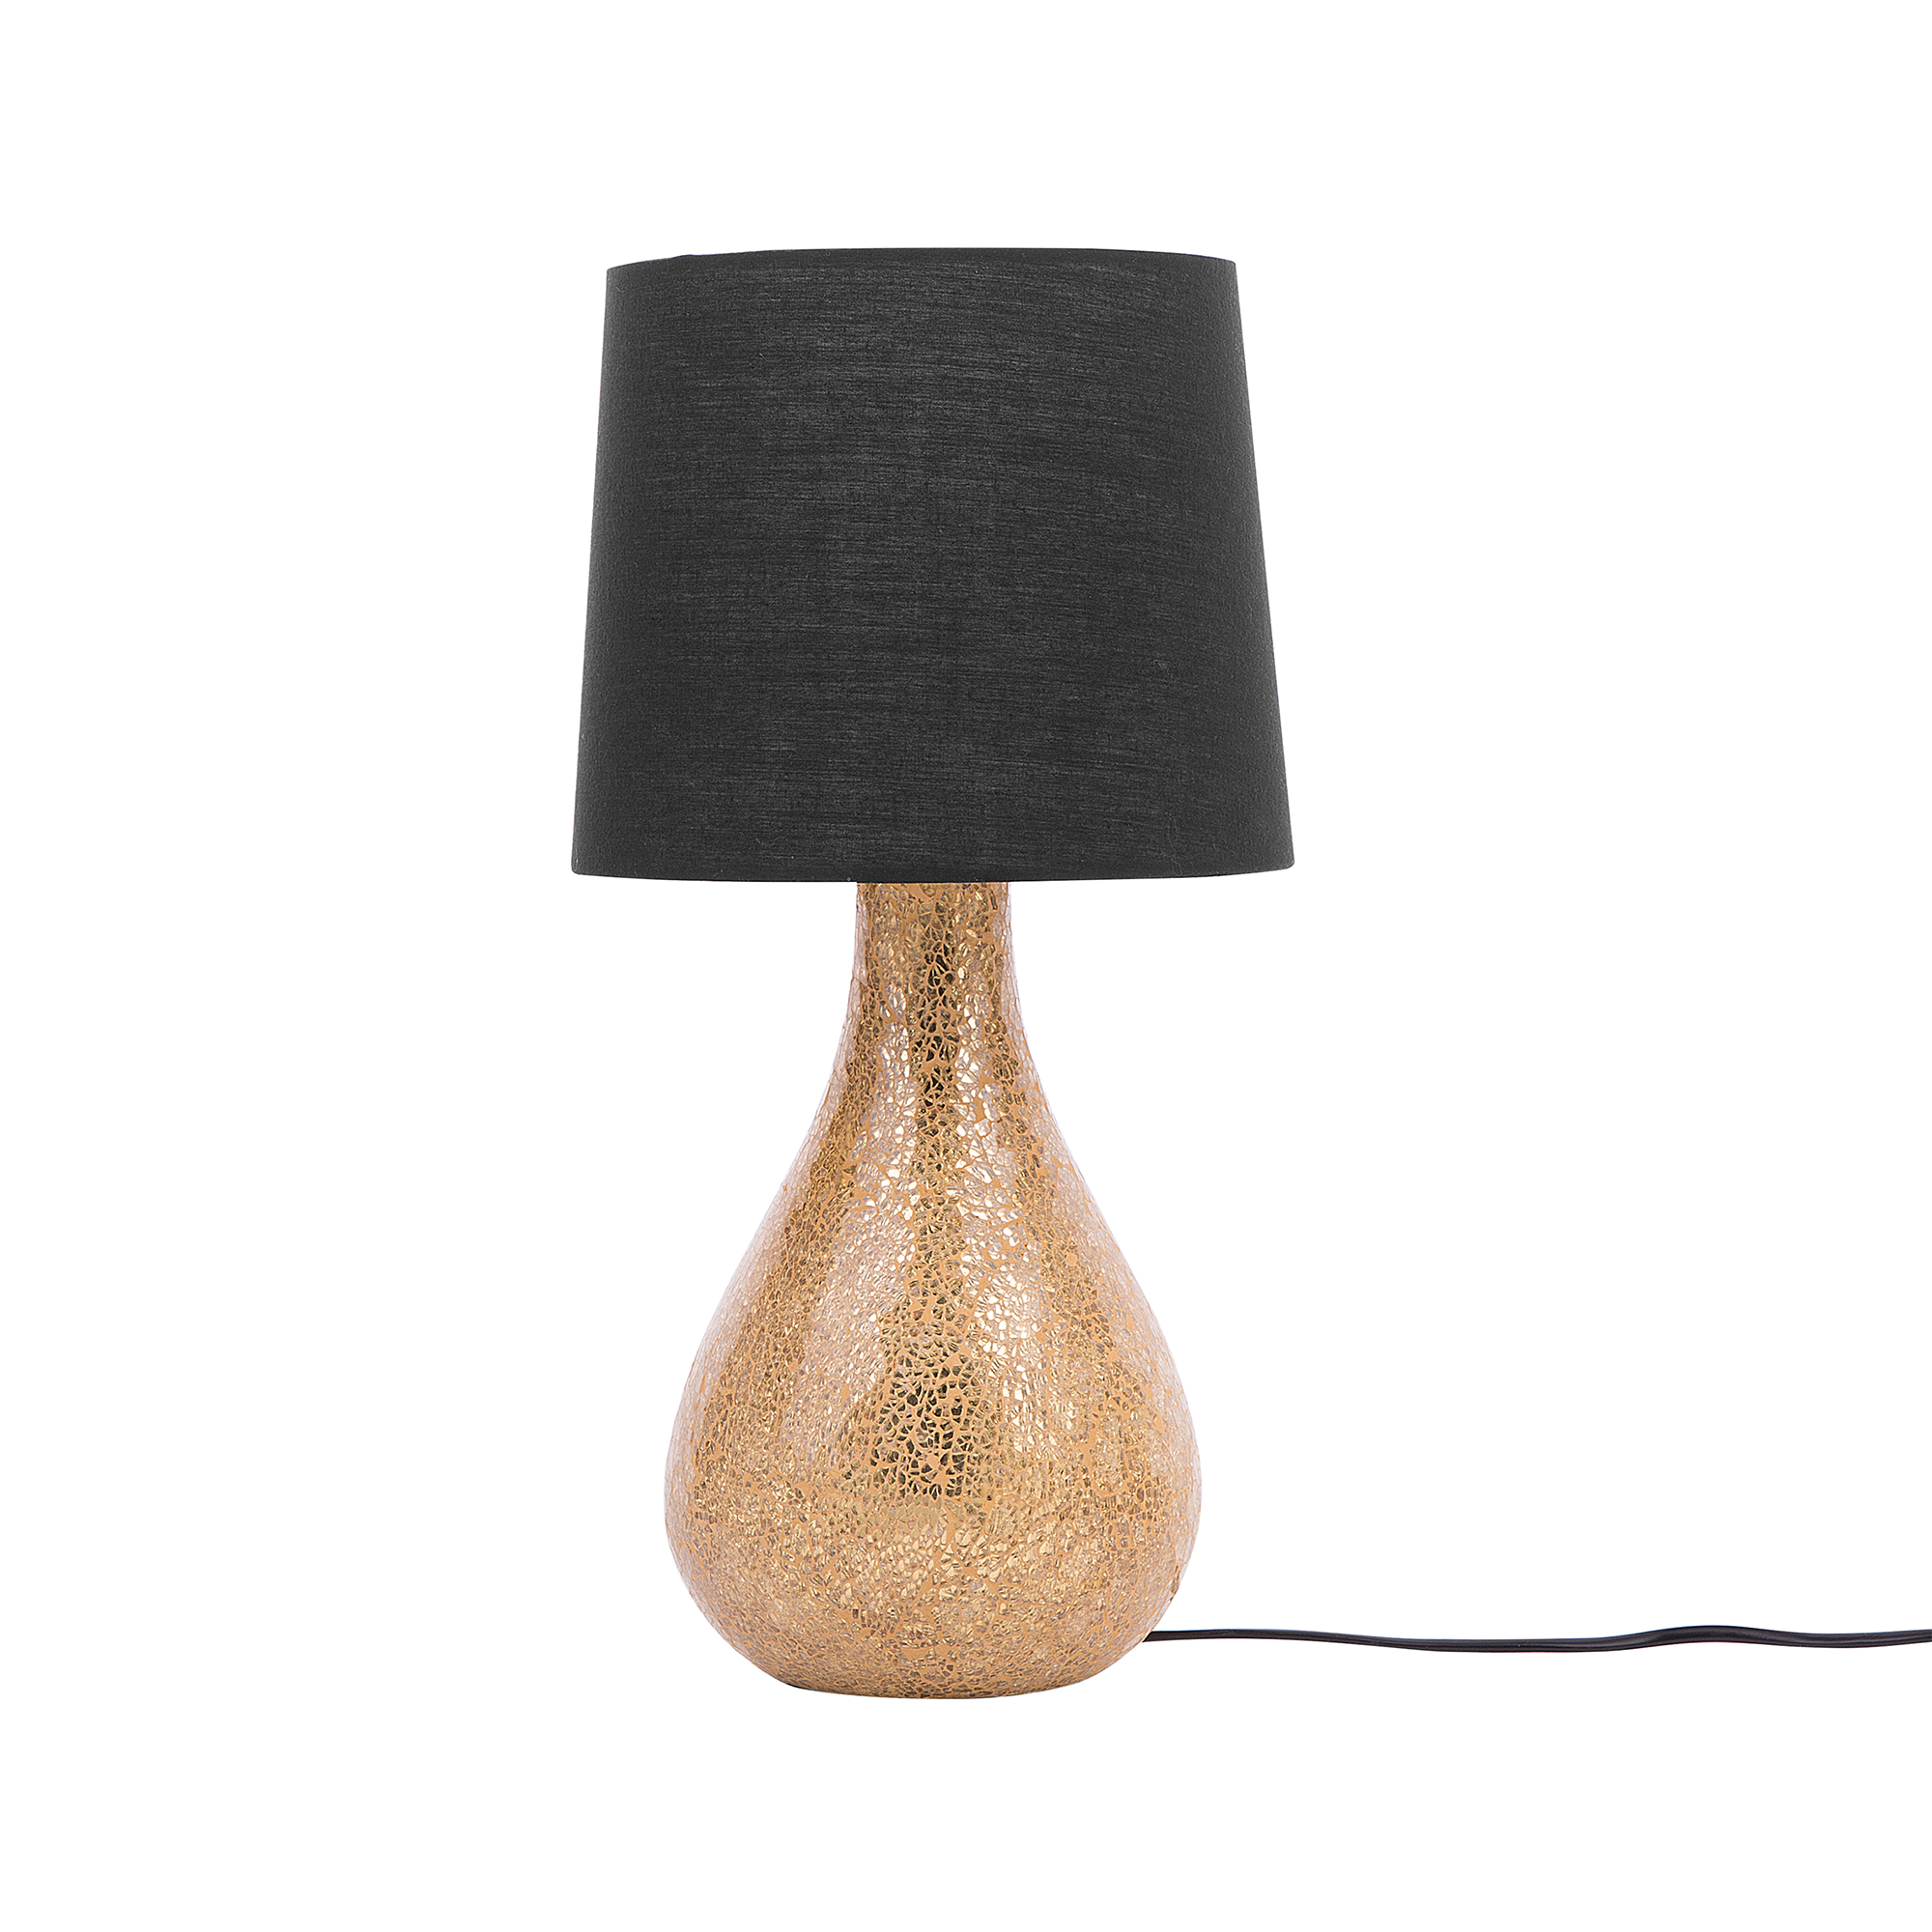 Beliani Table Lamp Gold Glass Base Black Drum Shade Bedside Light Modern Design